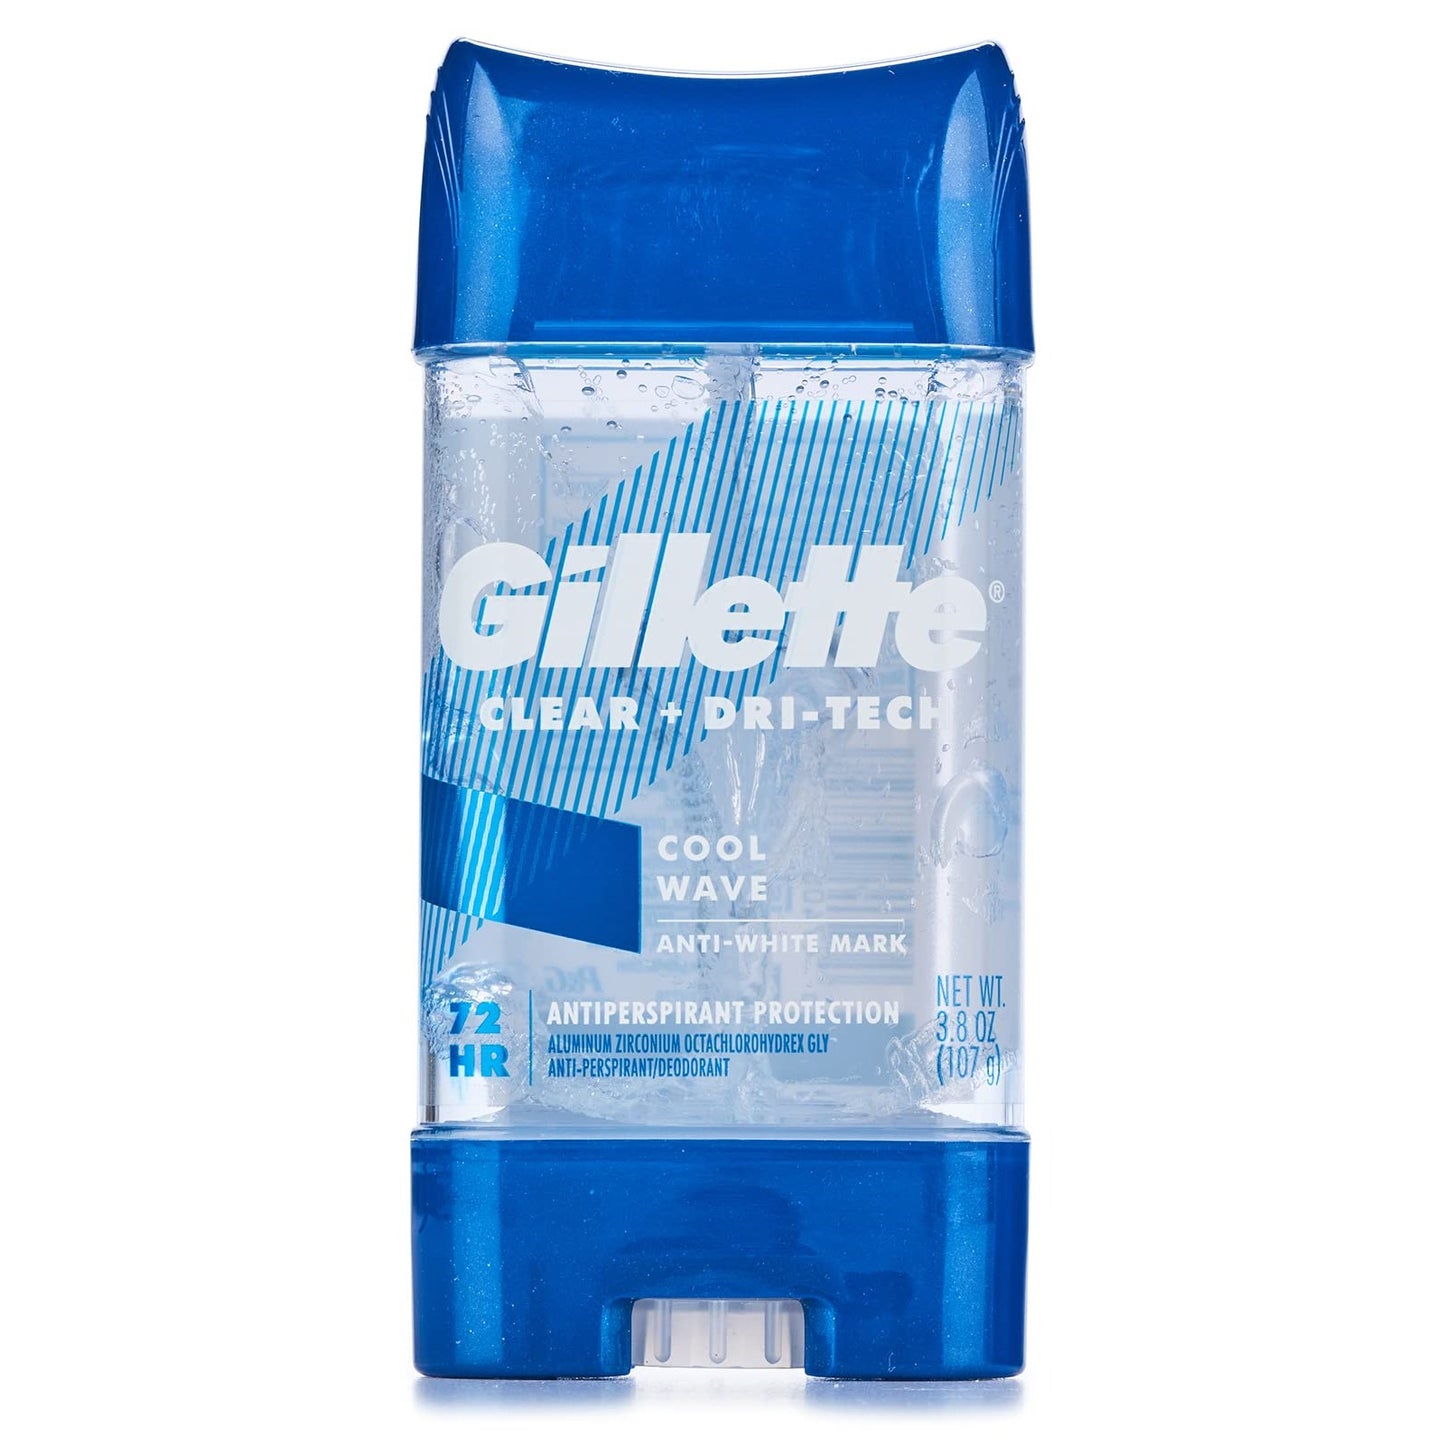 Gillette Clear + Dri-Tech Gel Deodorant Cool Wave 3.8oz